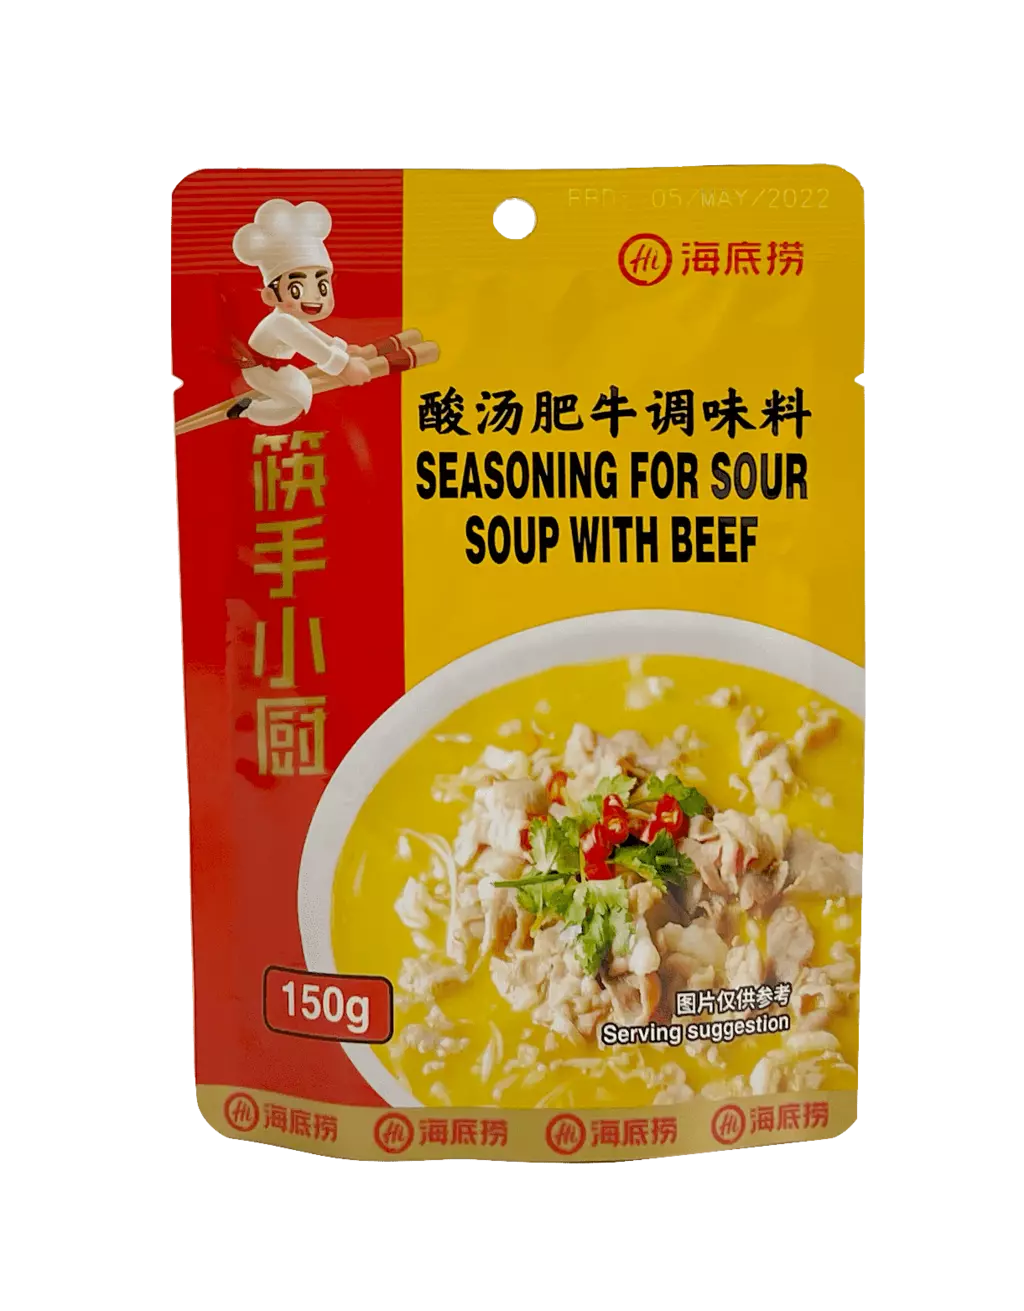 Sour Soup with Beef Seasoning 150g STFNTWL Haidilao China